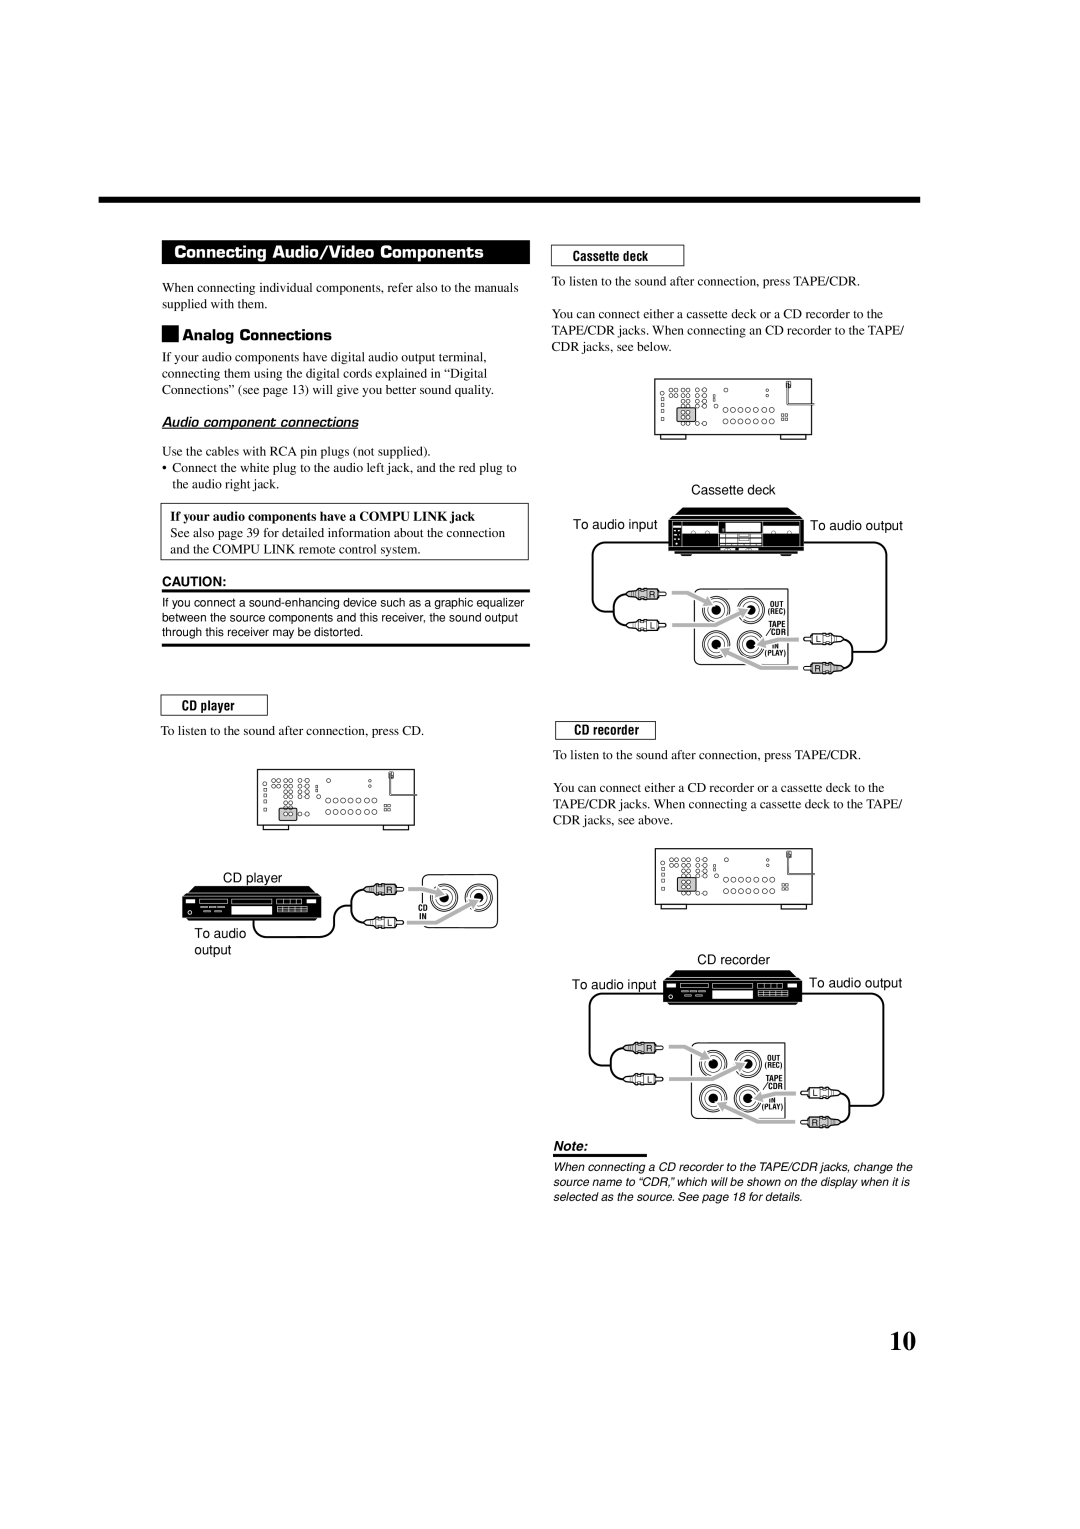 JVC RX-7032VSL manual Connecting Audio/Video Components, Analog Connections, Audio component connections 